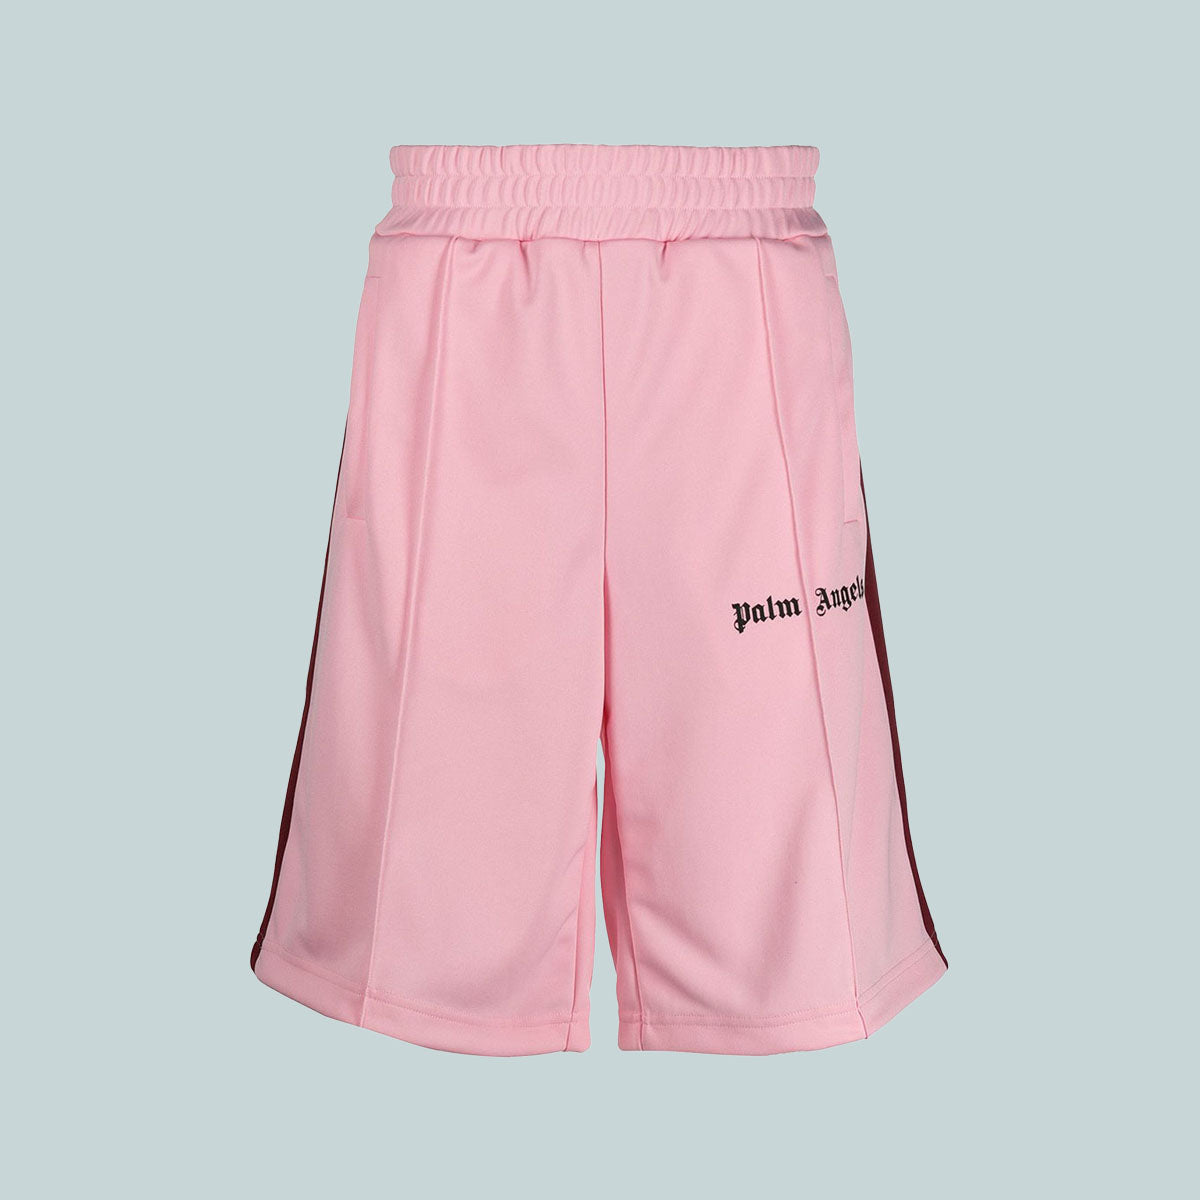 Track shorts pink